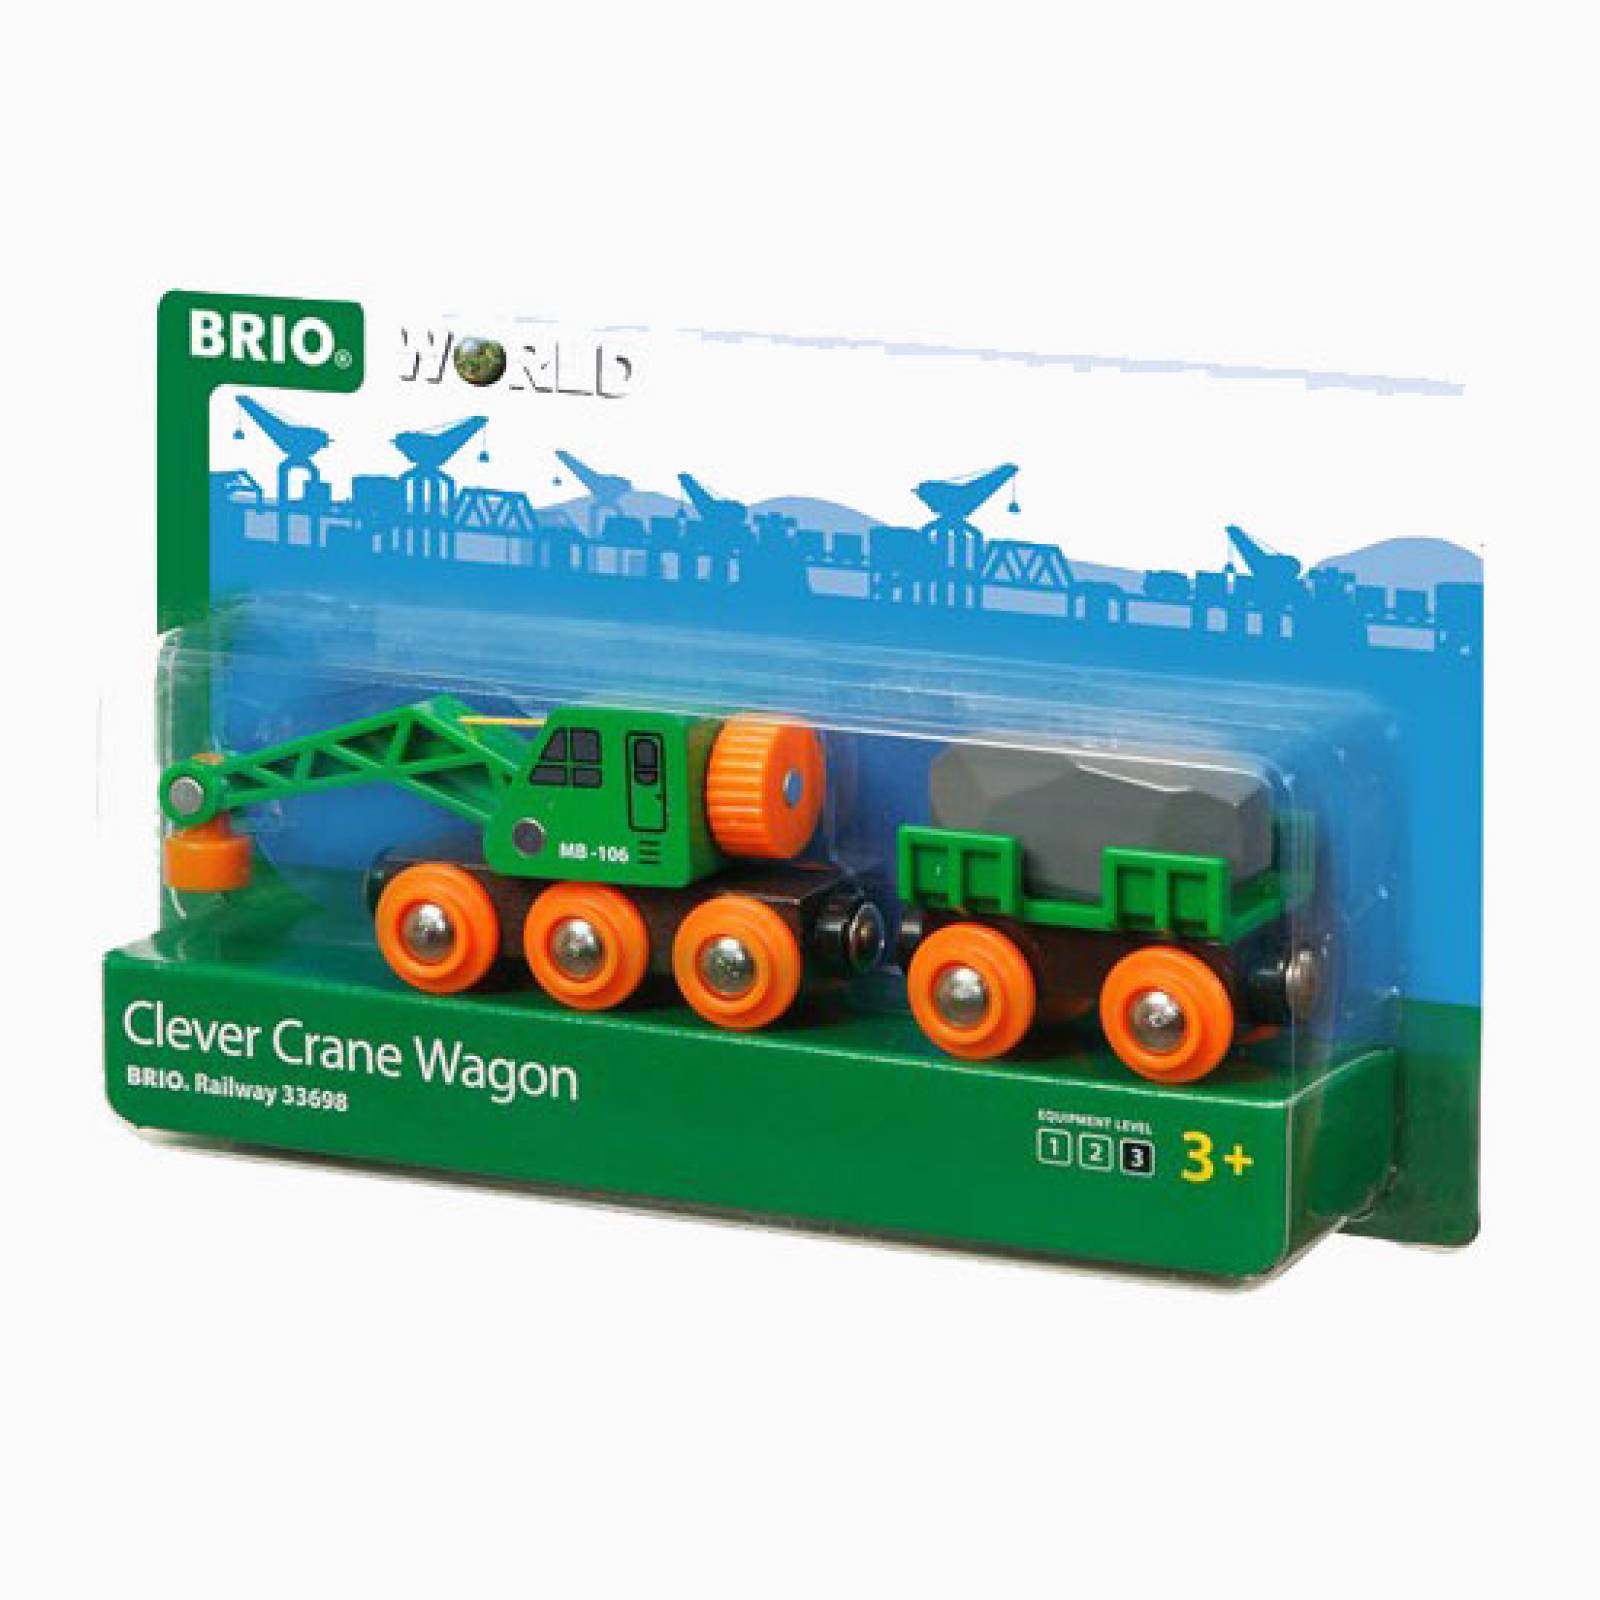 Clever Crane Wagon BRIO Wooden Railway Age 3+ thumbnails